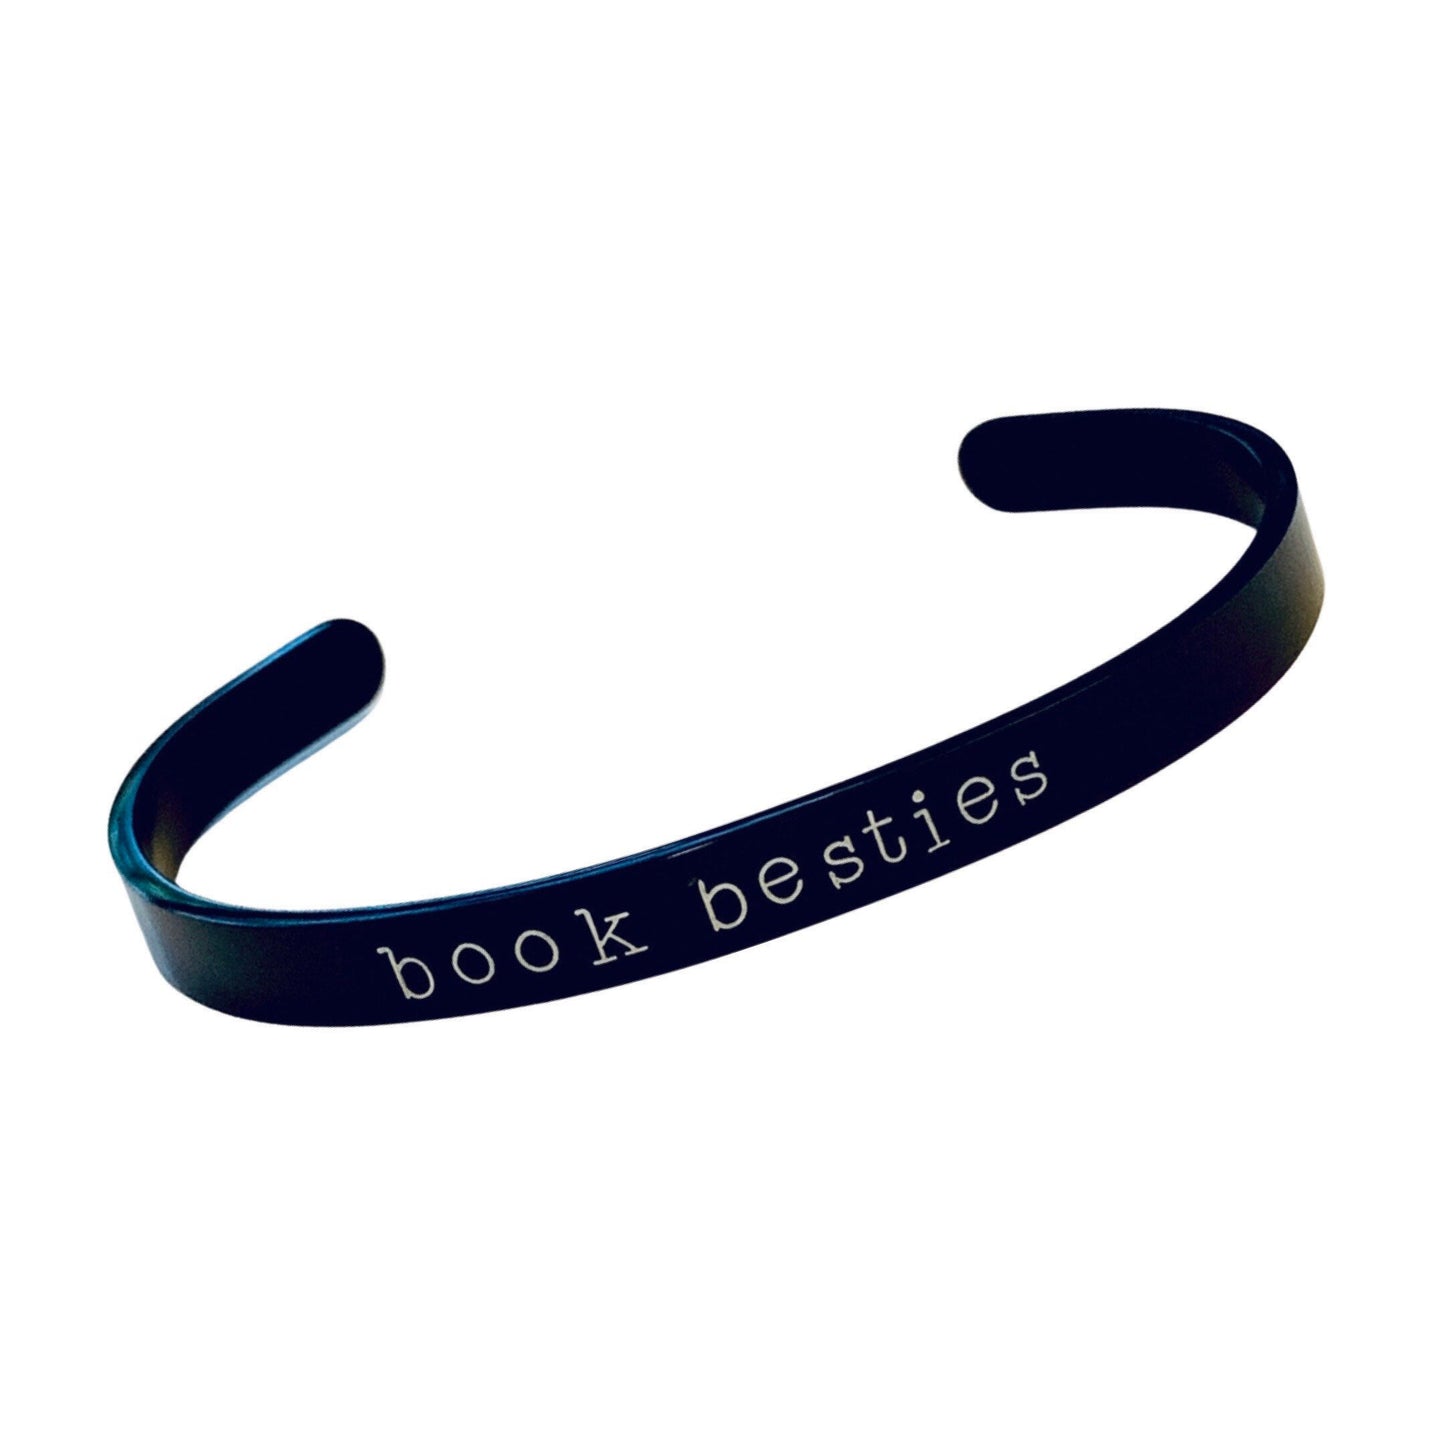 Book Besties - Cuff Bracelet